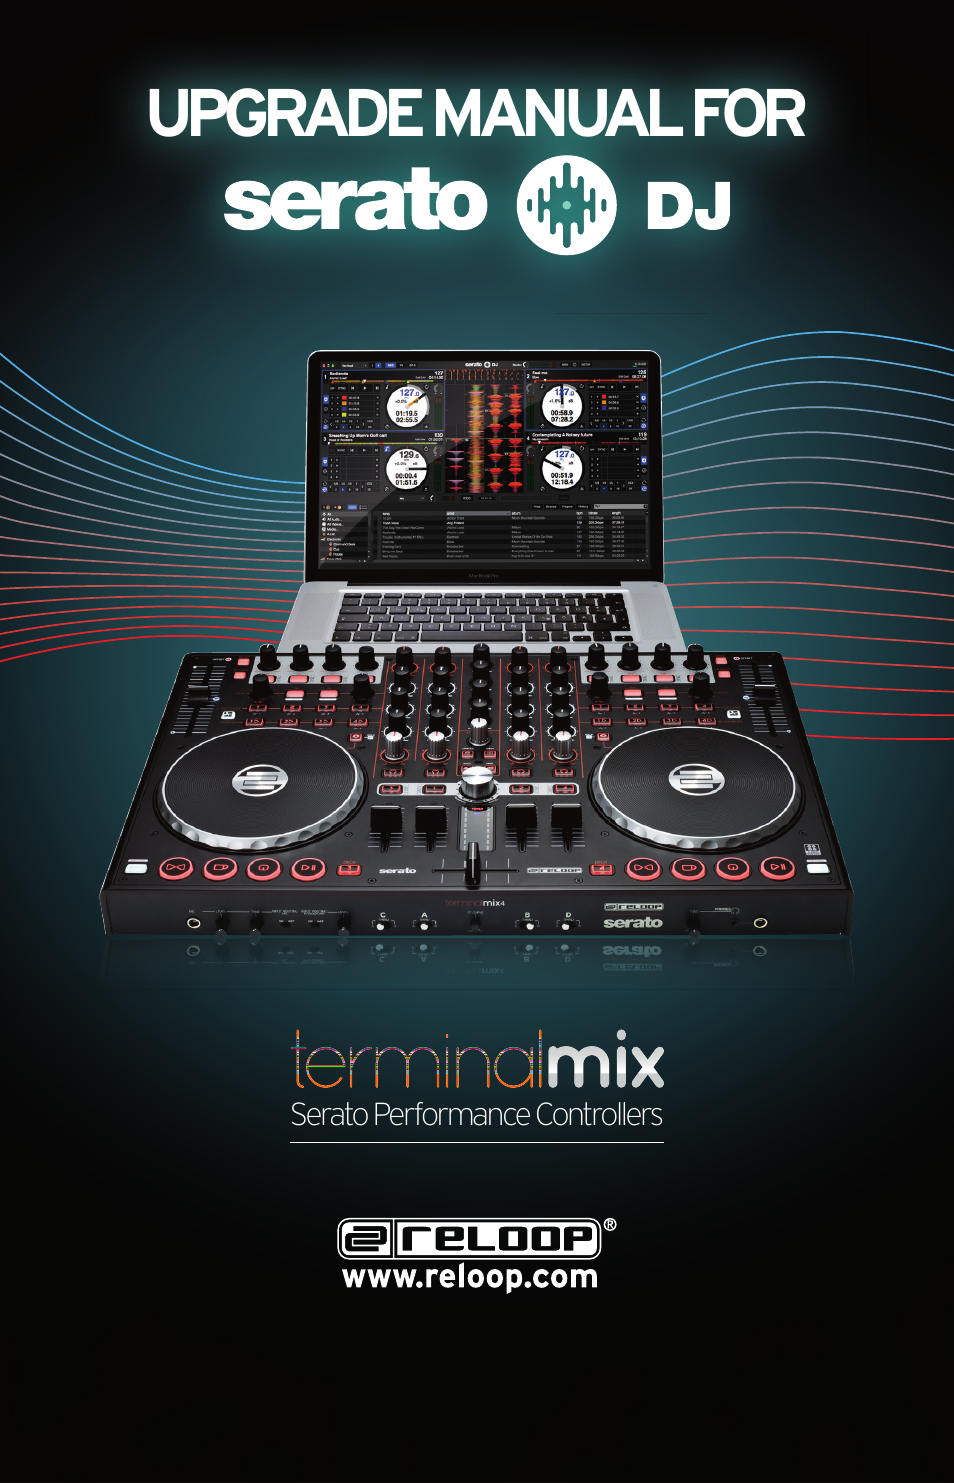 TERMINAL MIX 4 SERATO DJ BUNDLE - Upgrade Manual For Serato DJ